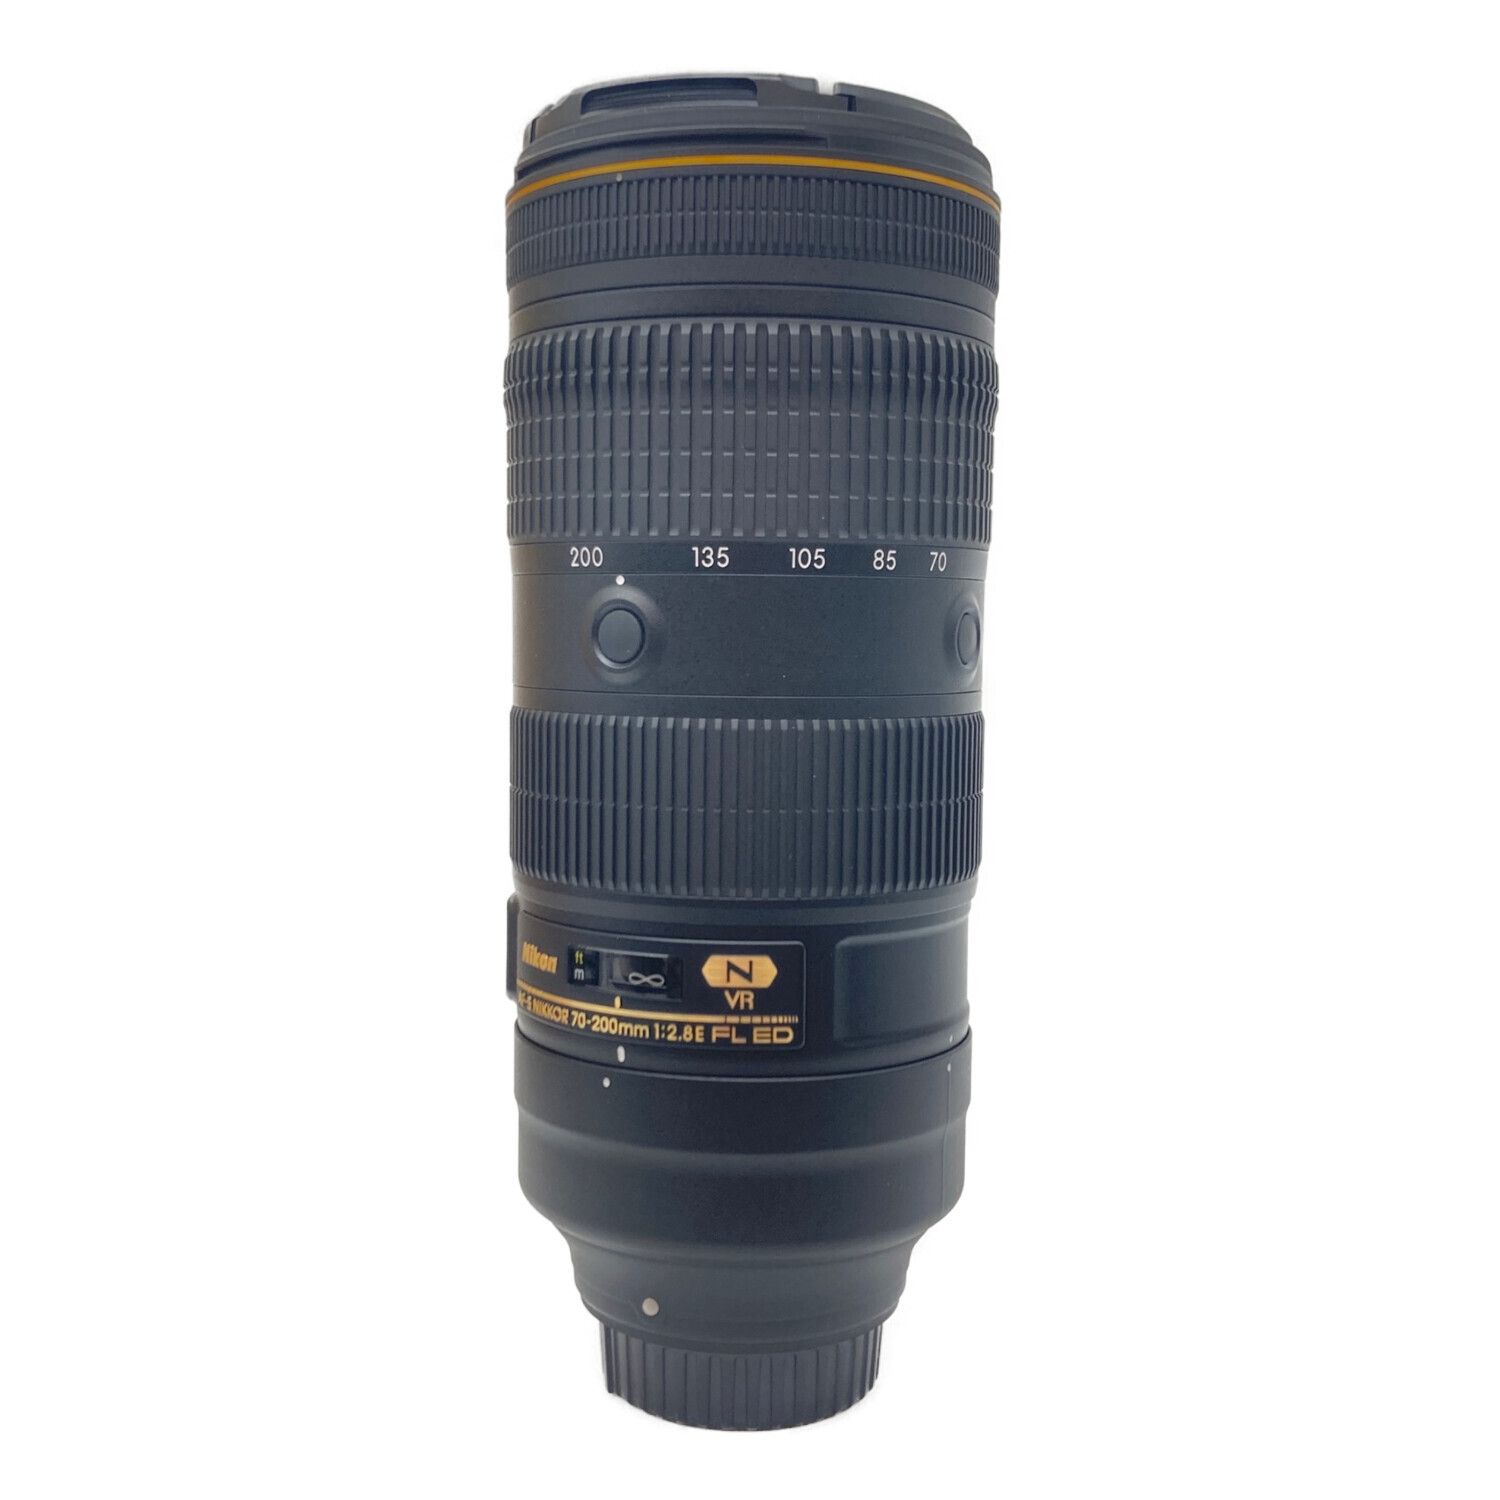 Nikon (ニコン) ズームレンズ FL ED VR NIKKOR LENS 70-200mm f/2.8E 